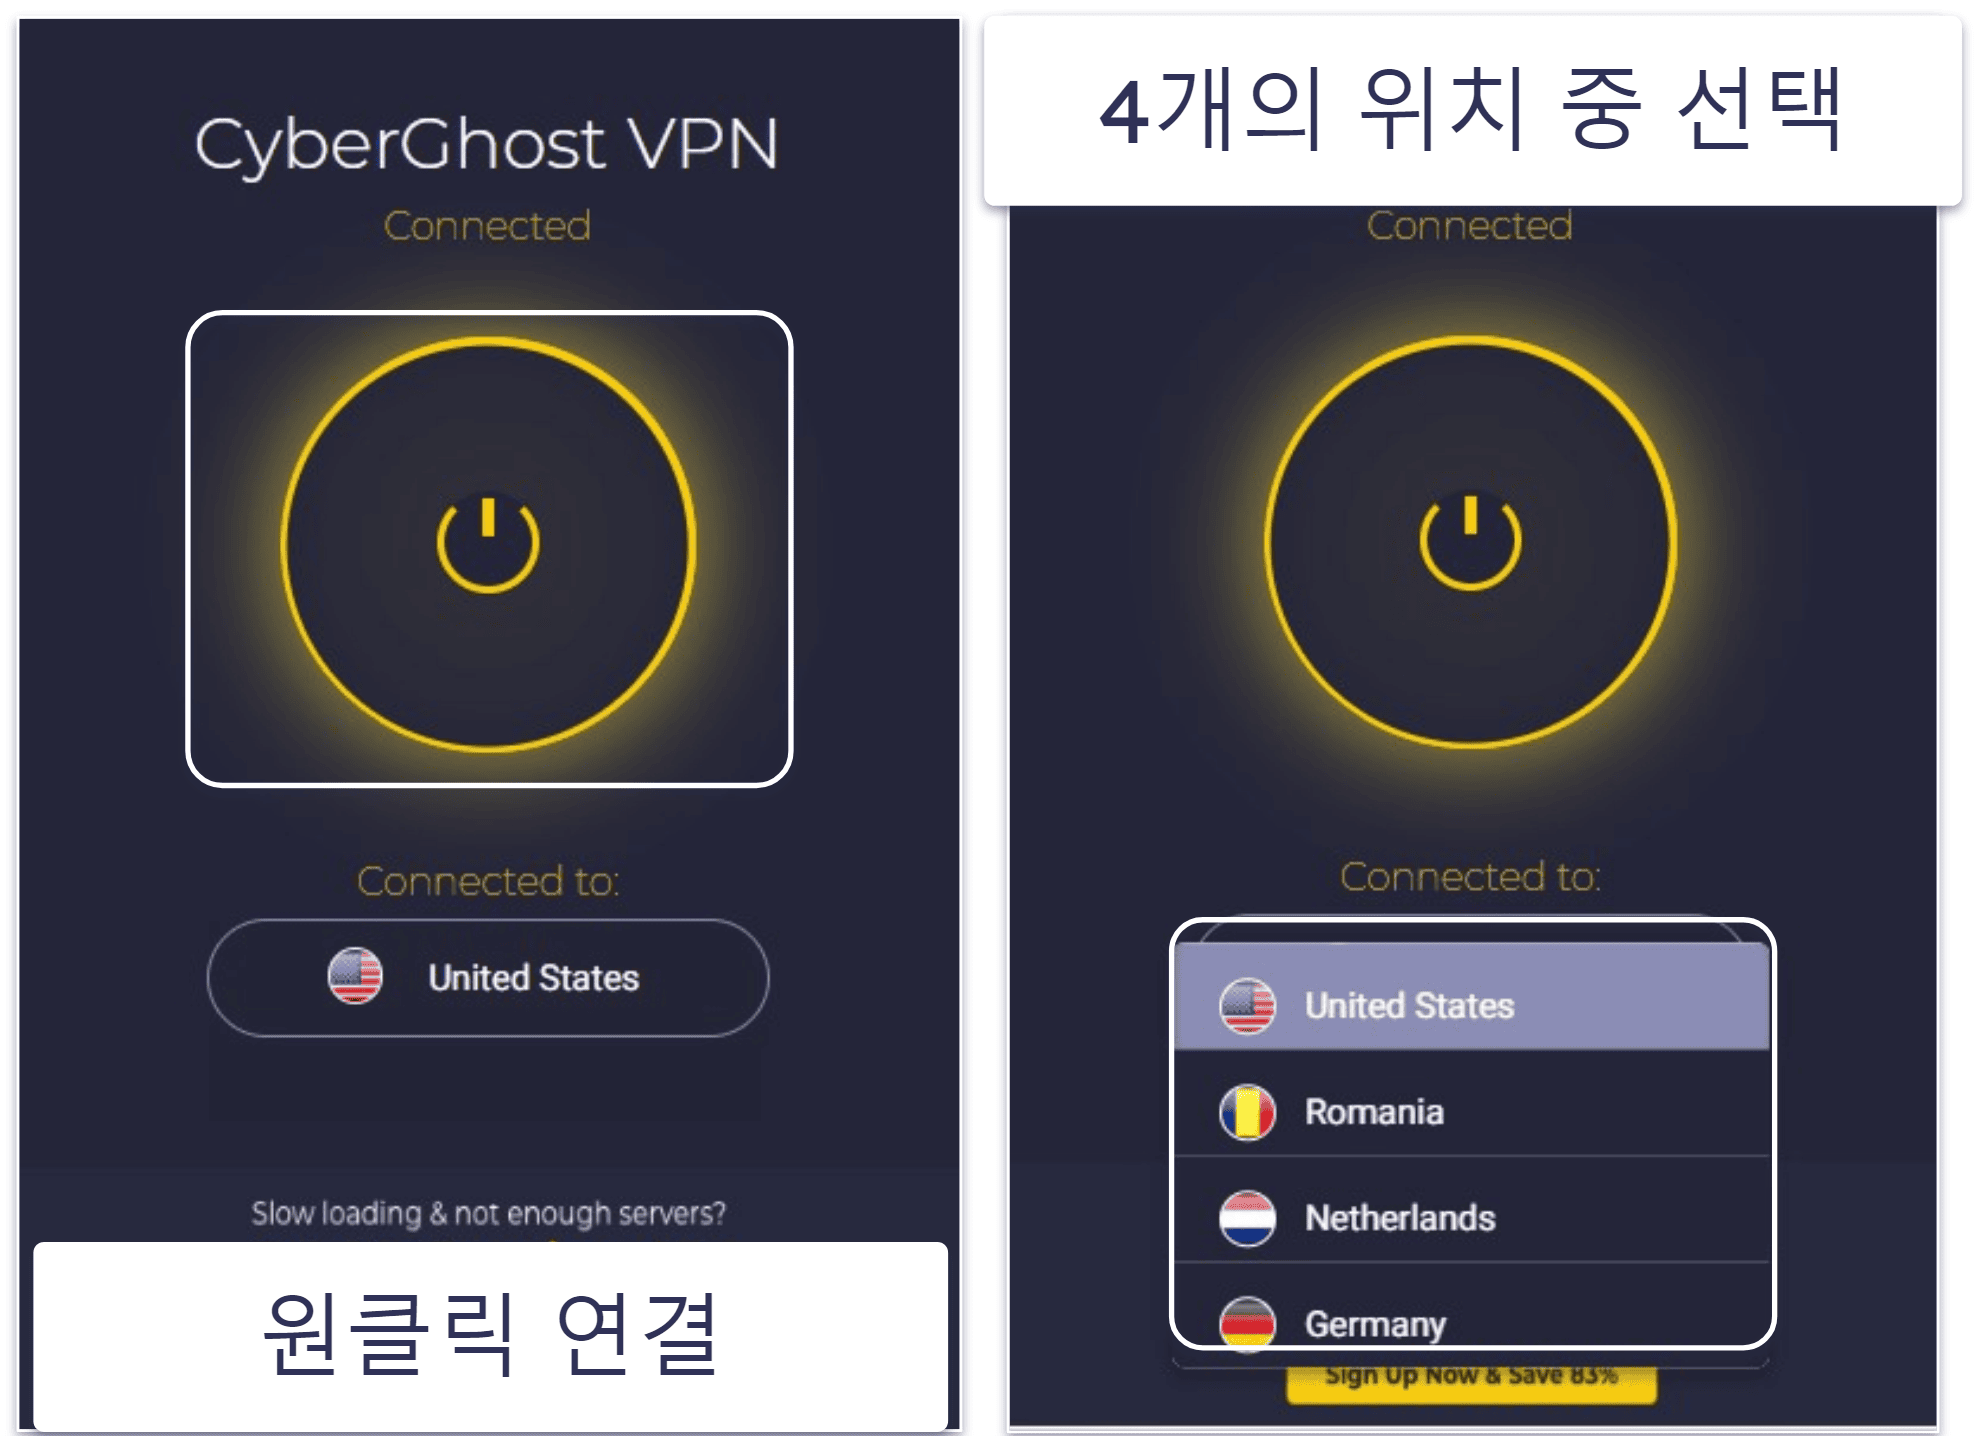 CyberGhost VPN 사용의 편리함: 모바일 및 데스크톱 앱